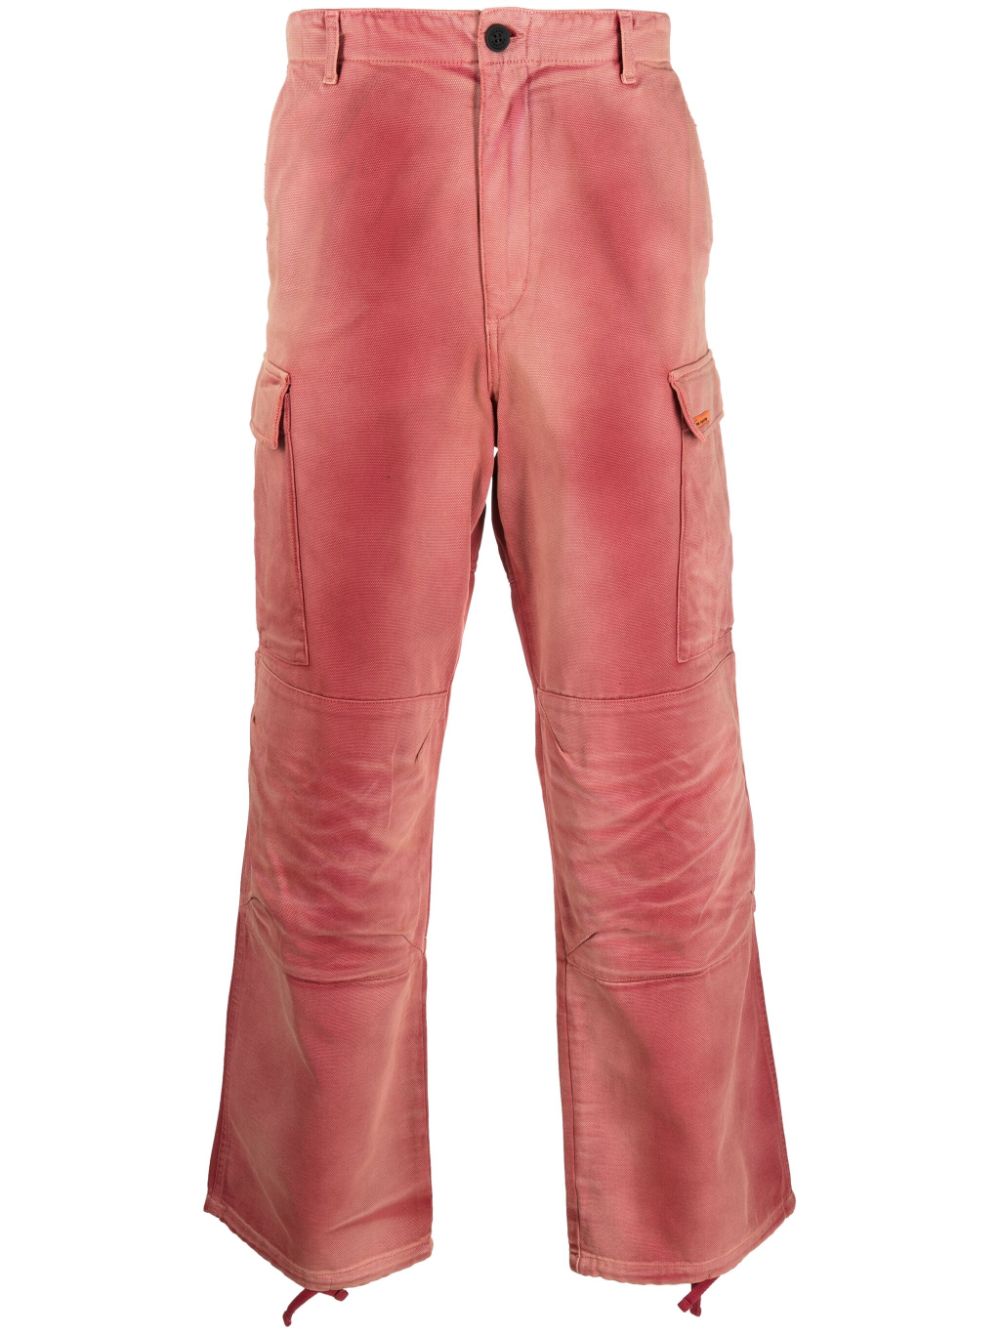 Women's Pink Corduroy Cargo Pants Cotton Corduroy Pants 